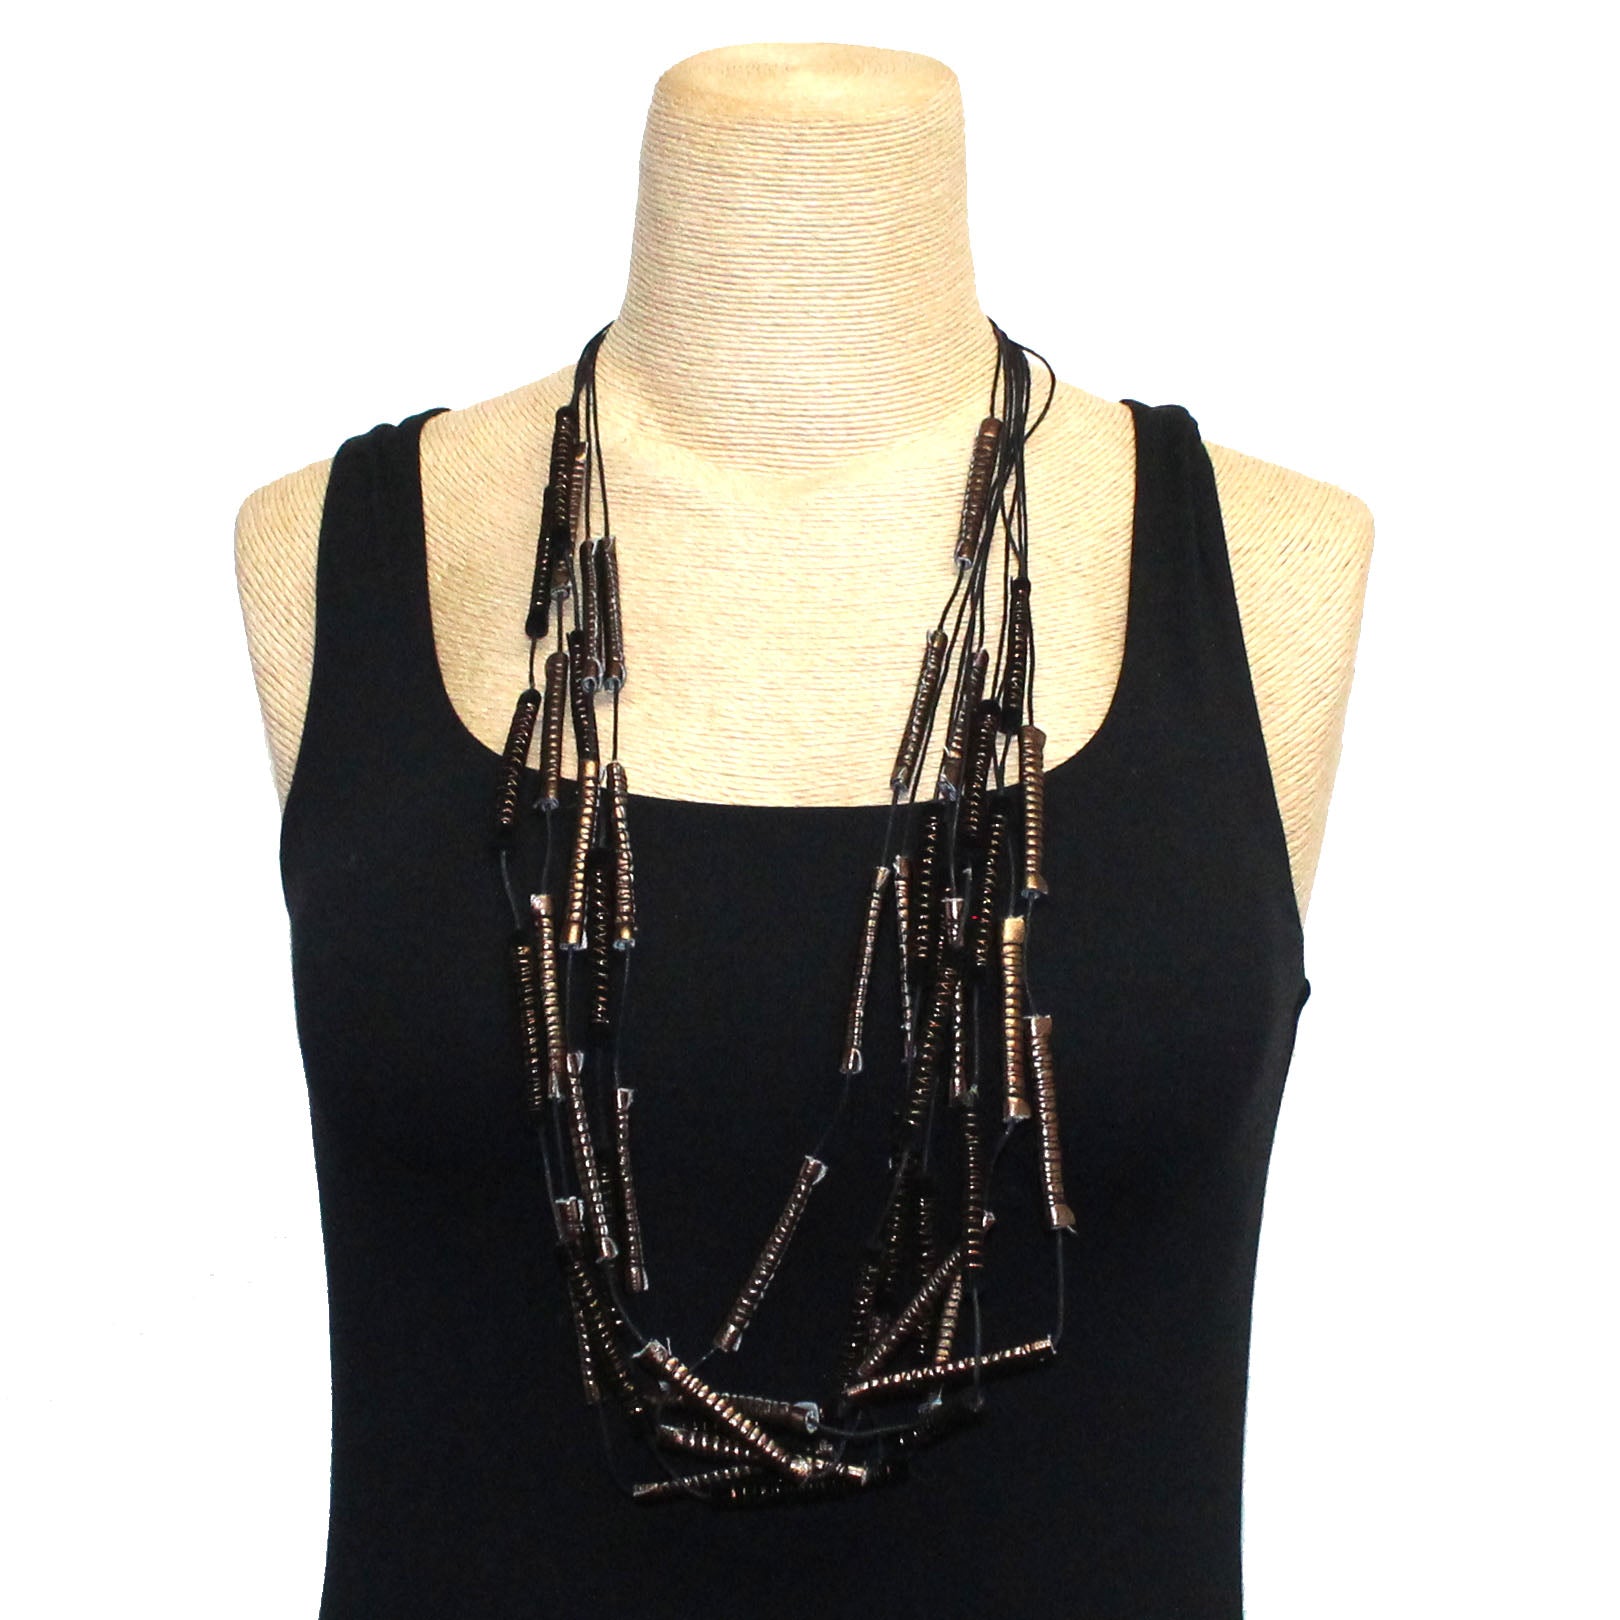 Beyond Threads Necklace, Pirouette, Black/Bronze